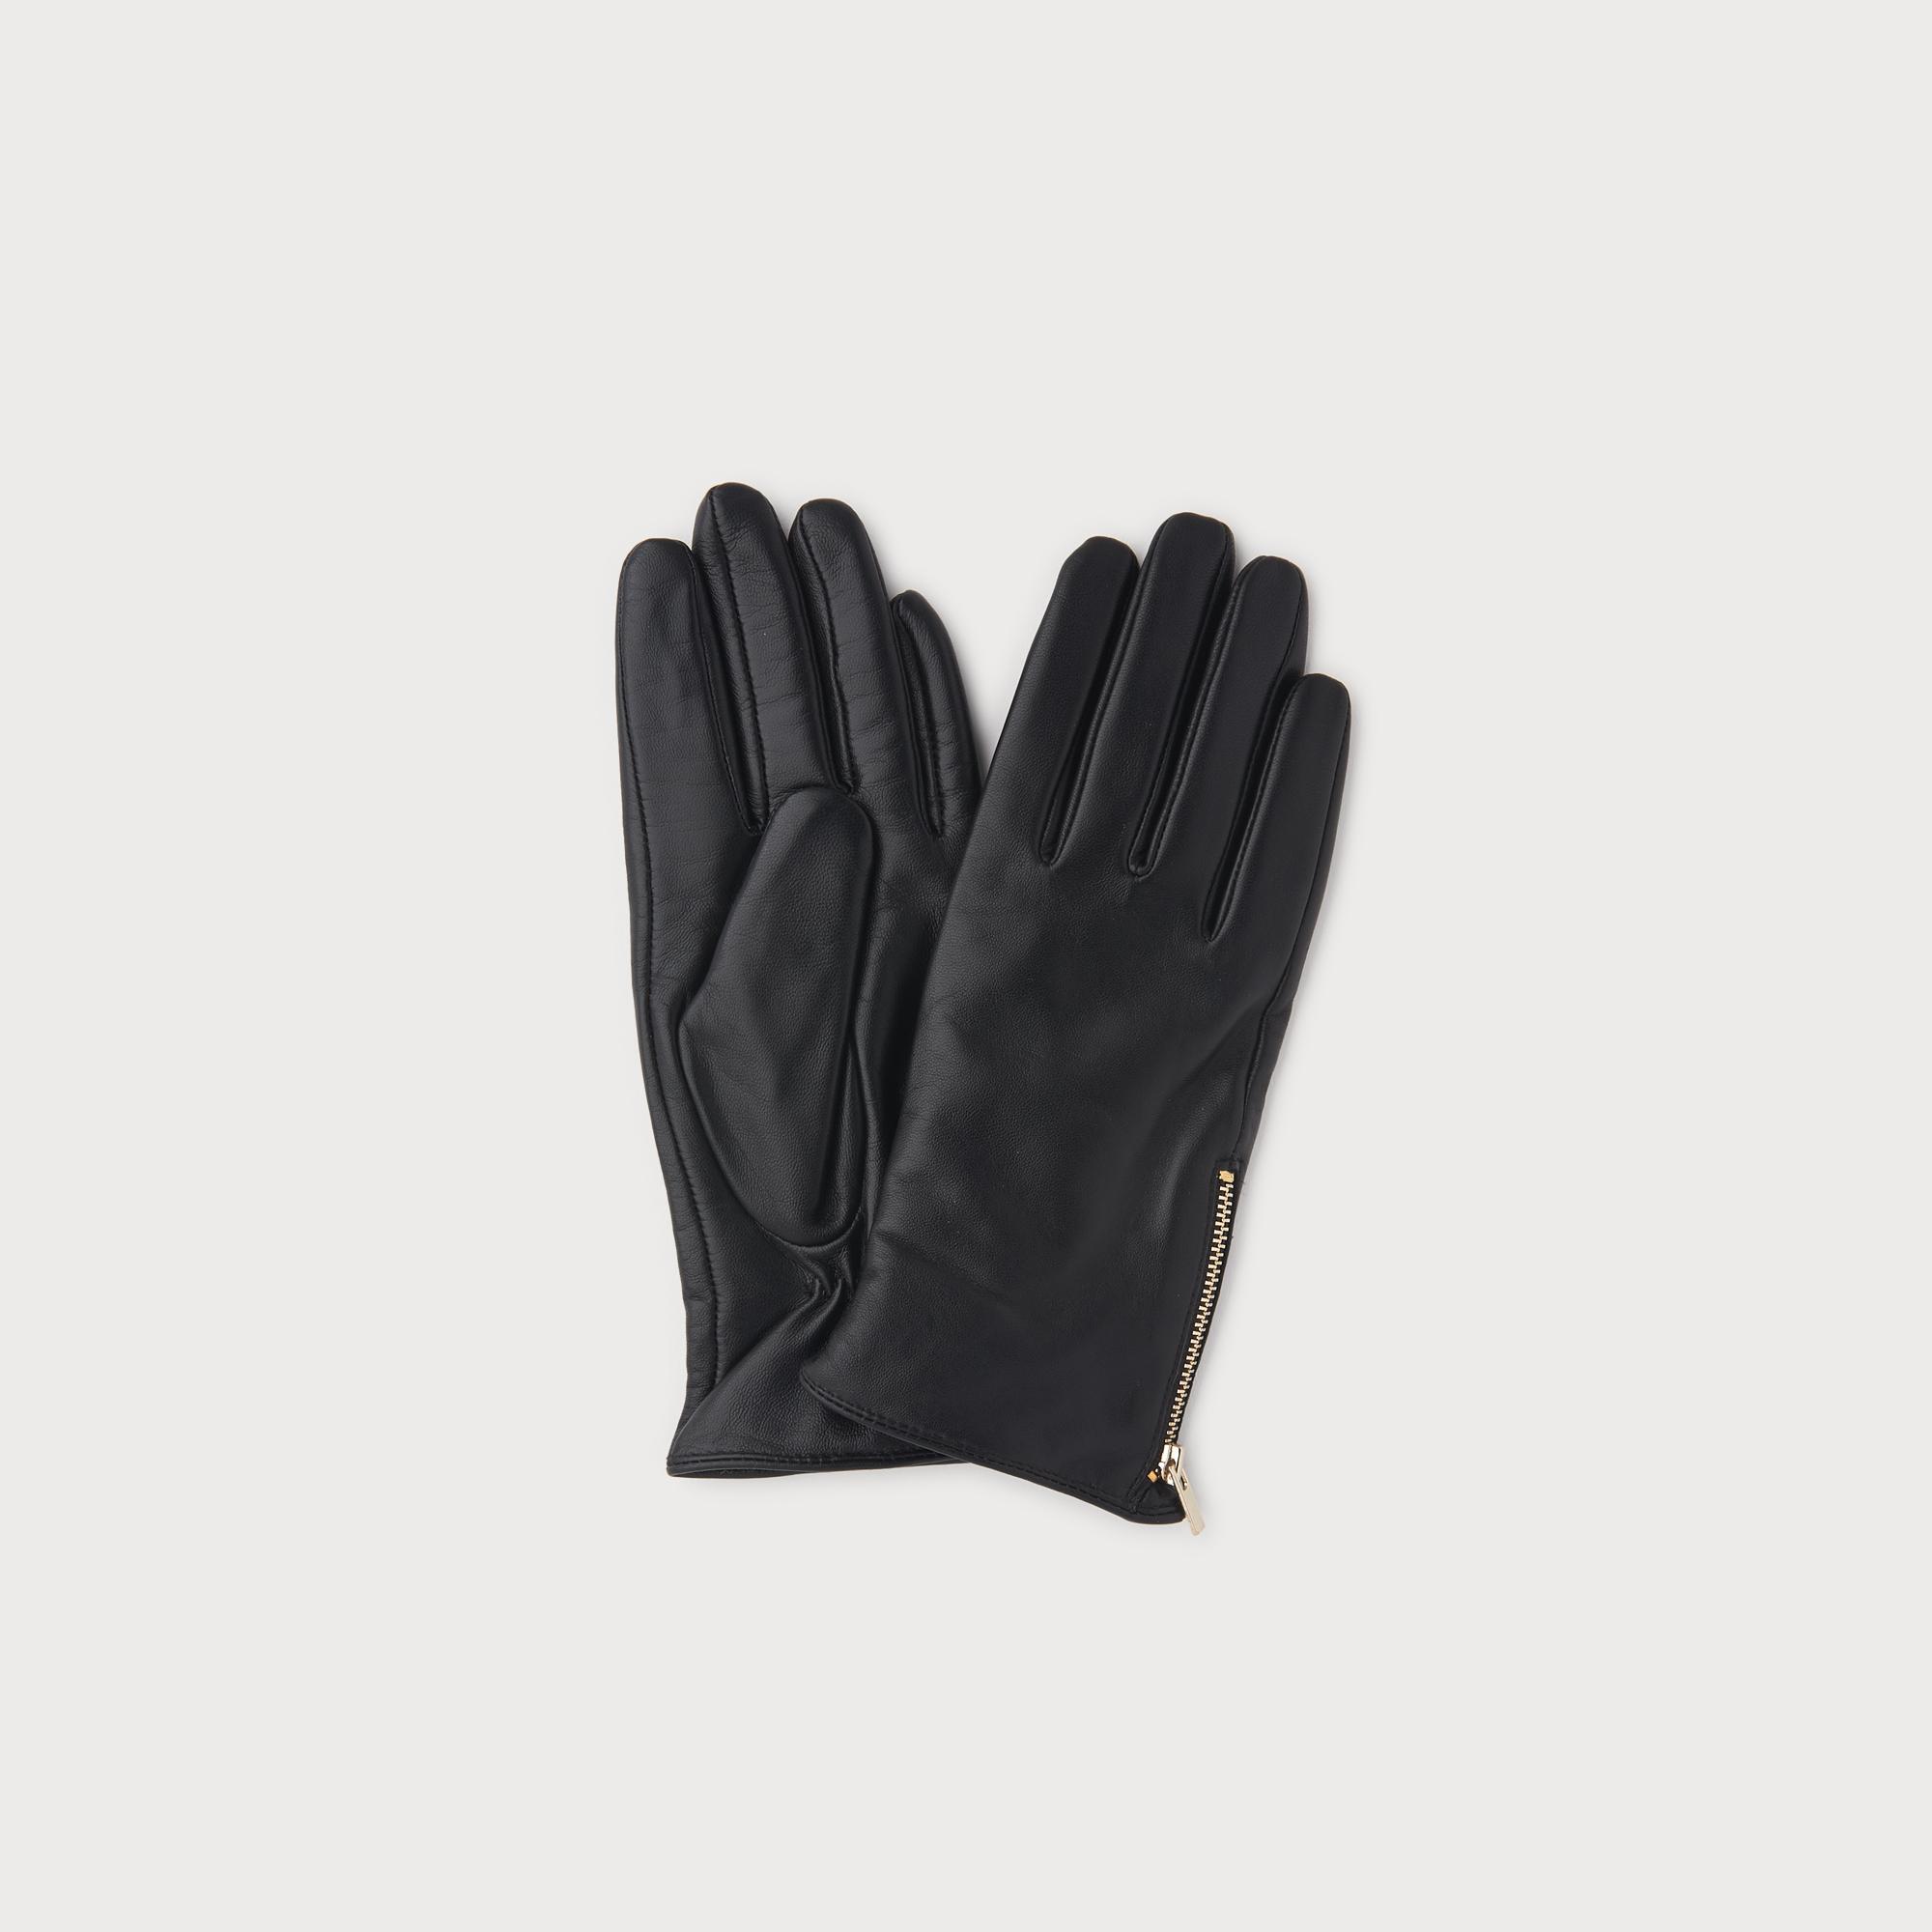 leather gloves uk